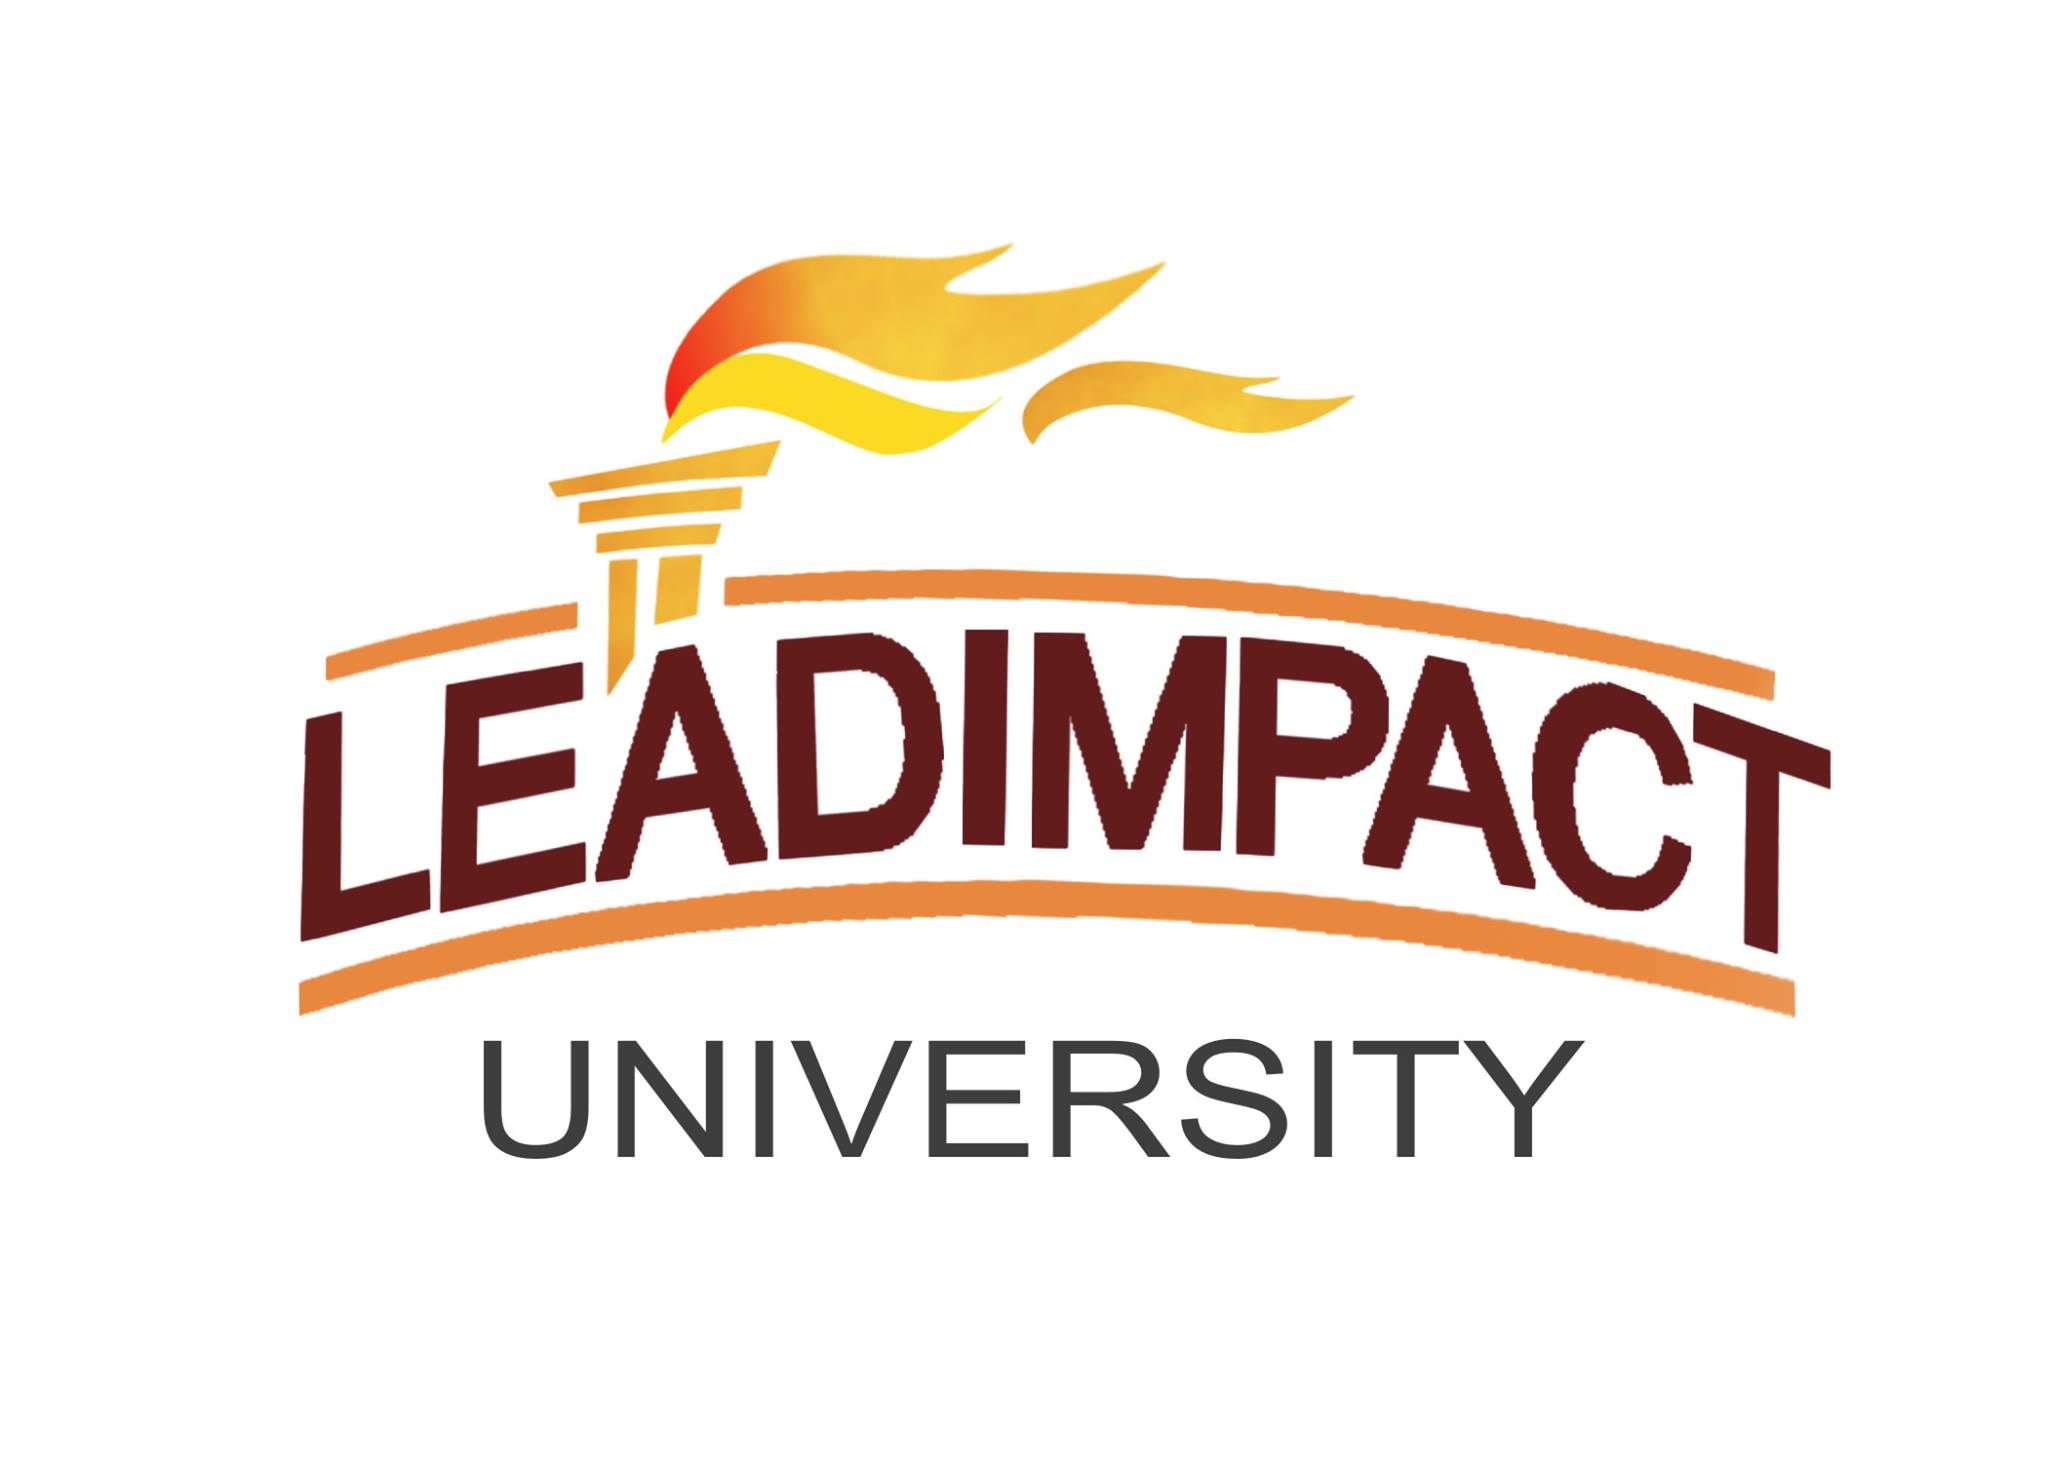 leadimpact university:.jpg